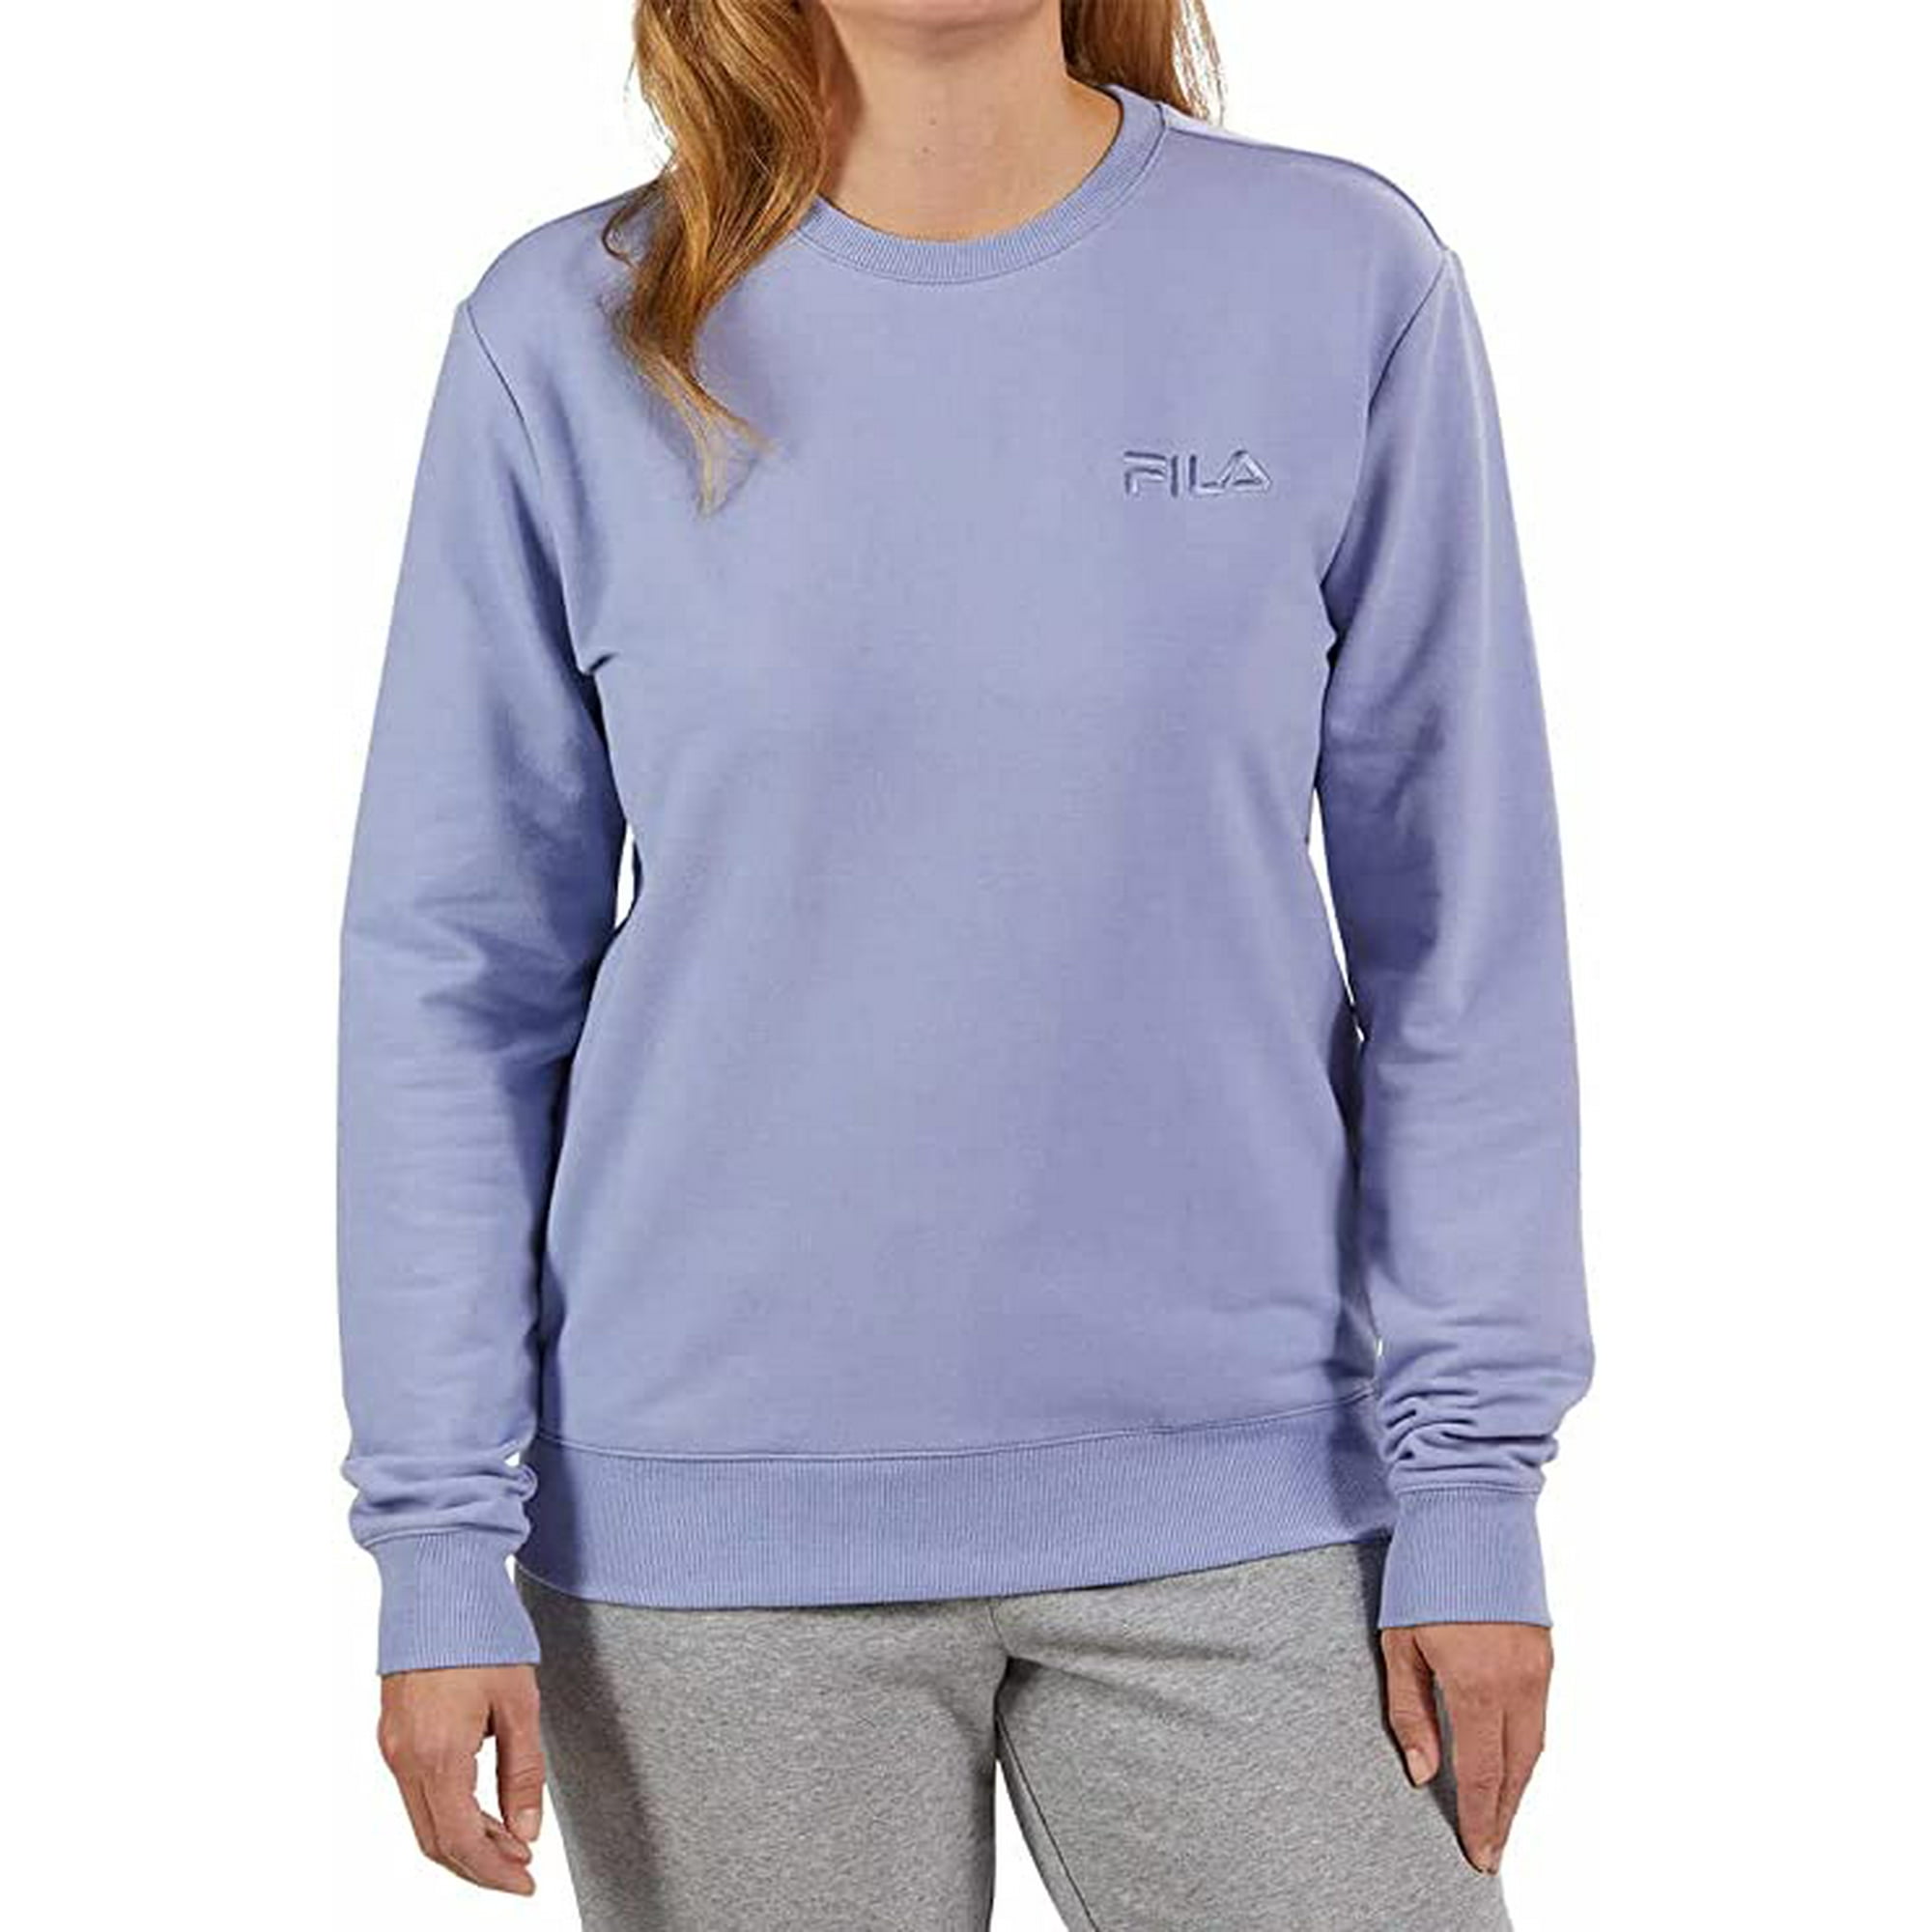 Fila Womens French Sweatshirt,Purple Impression,Large Walmart.com